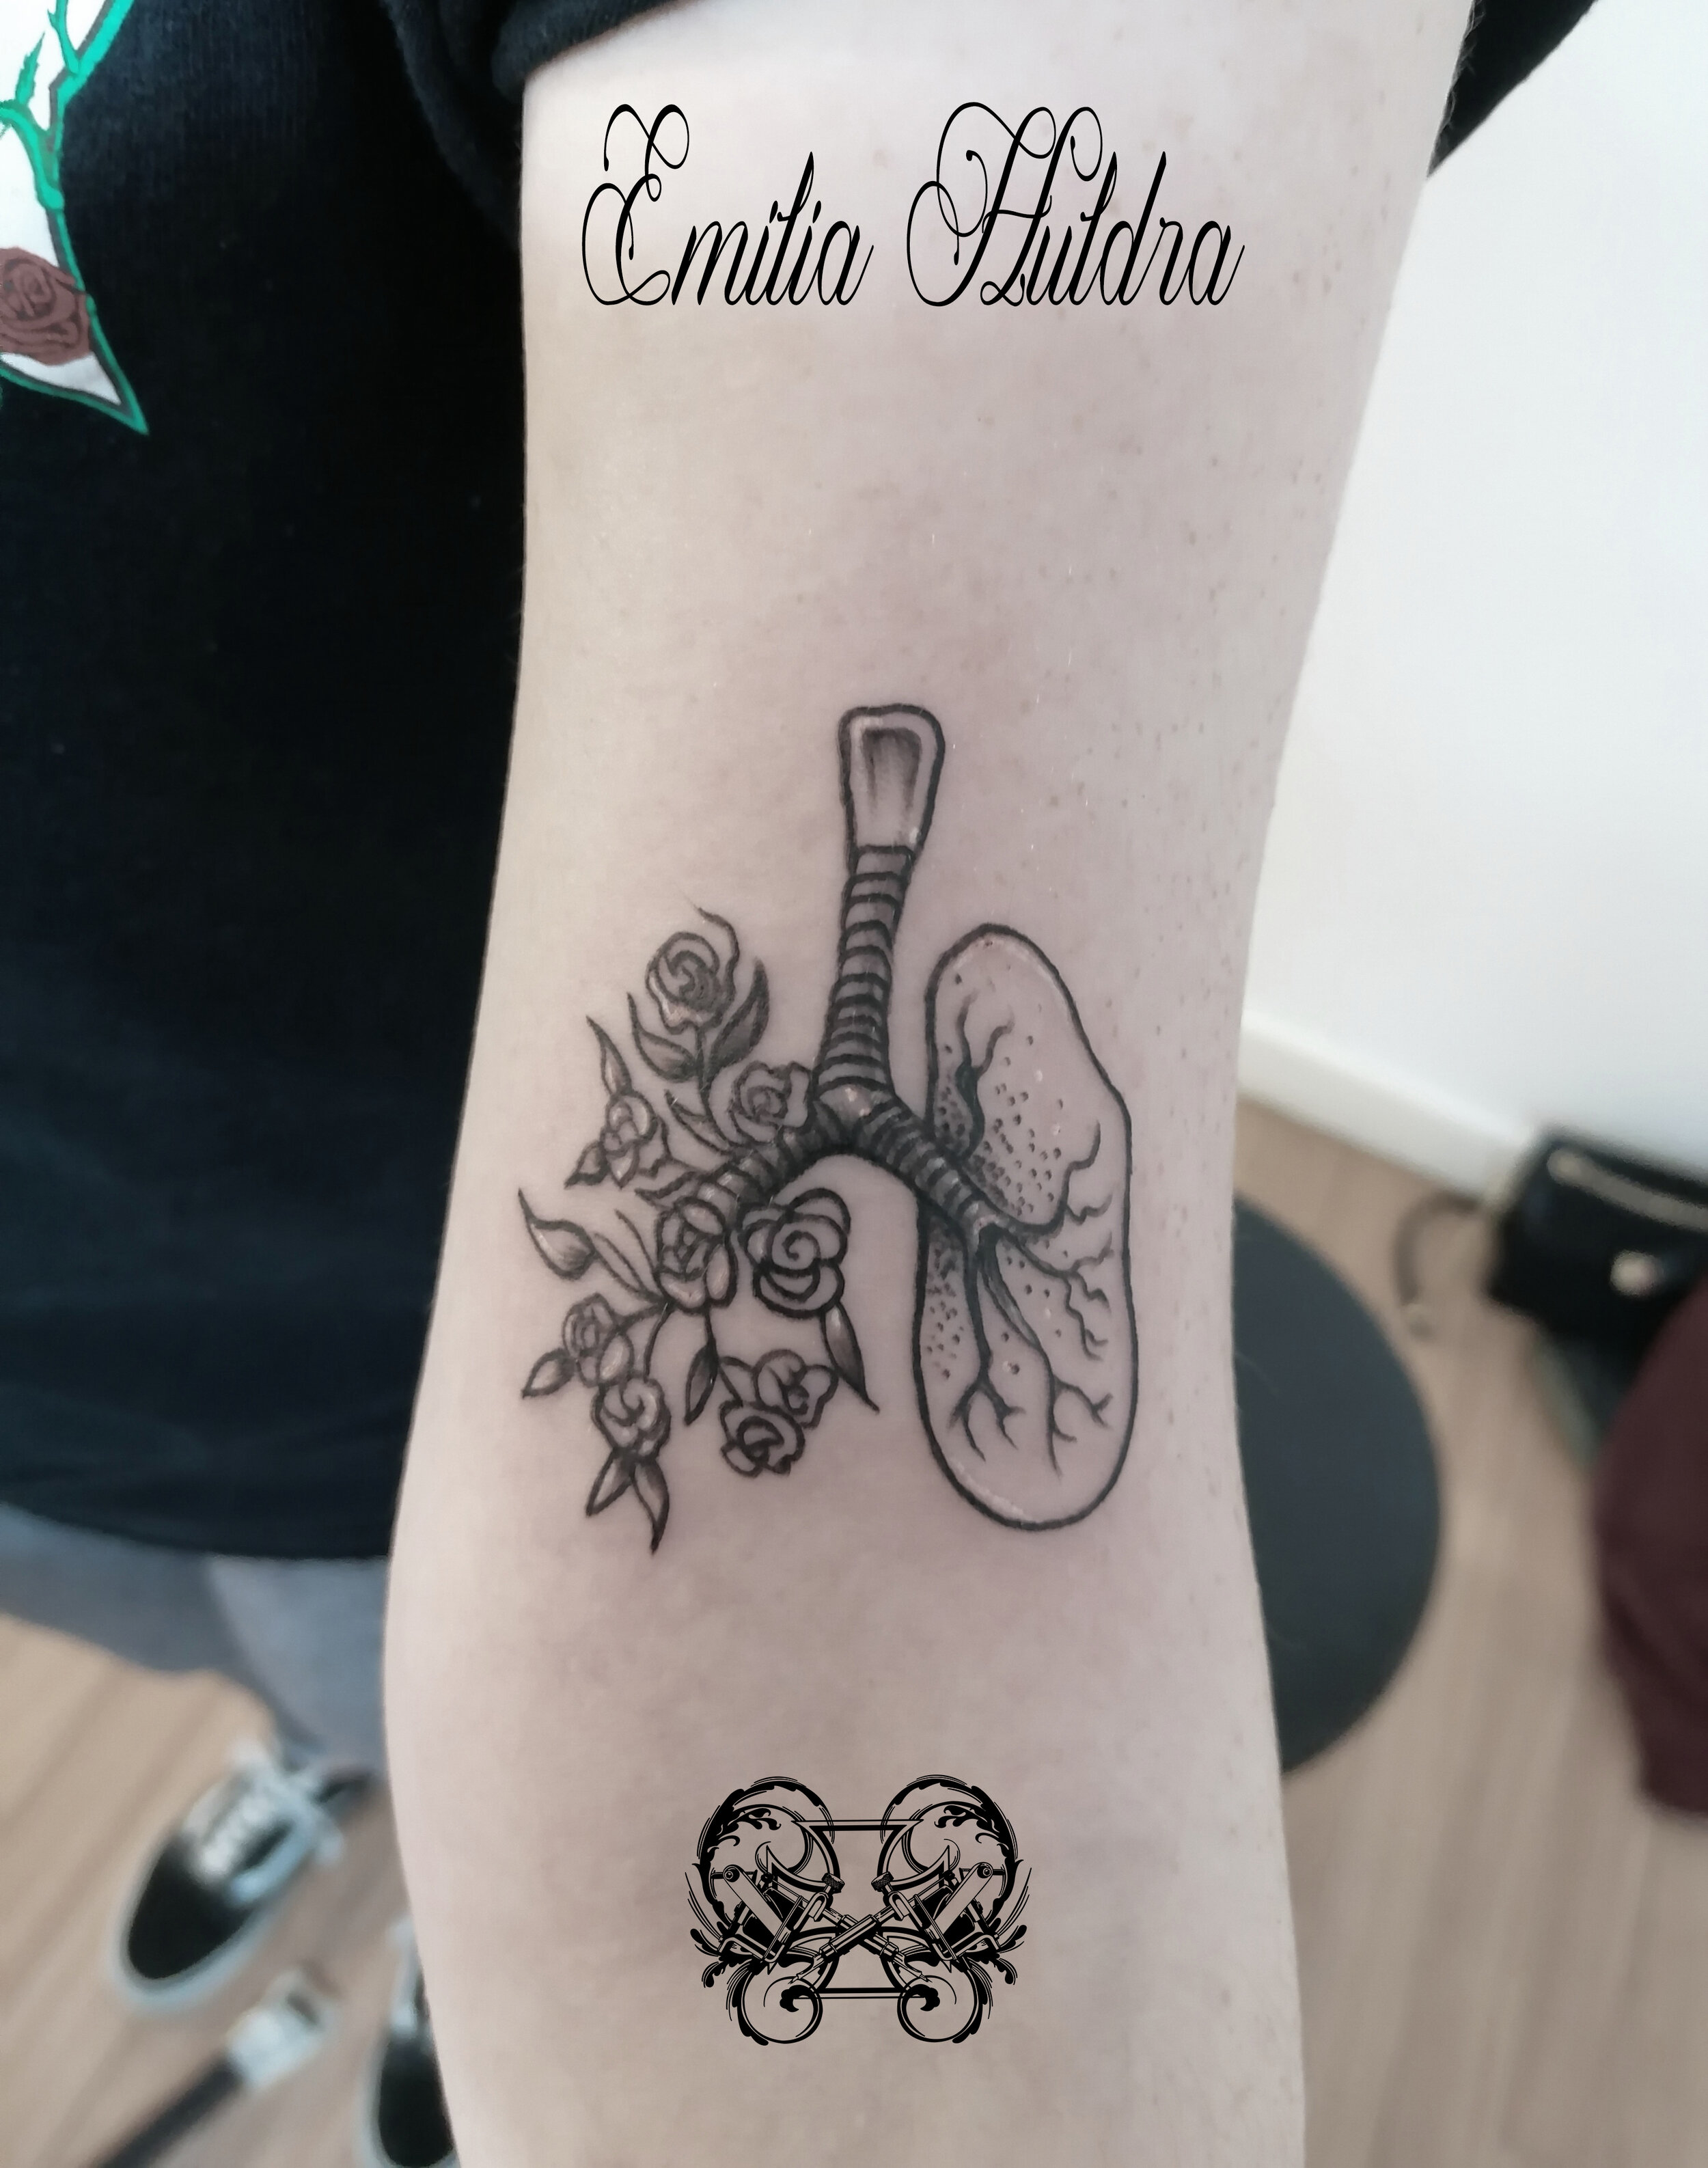 Emilia - lungs and flowers - b&g - edited.jpg